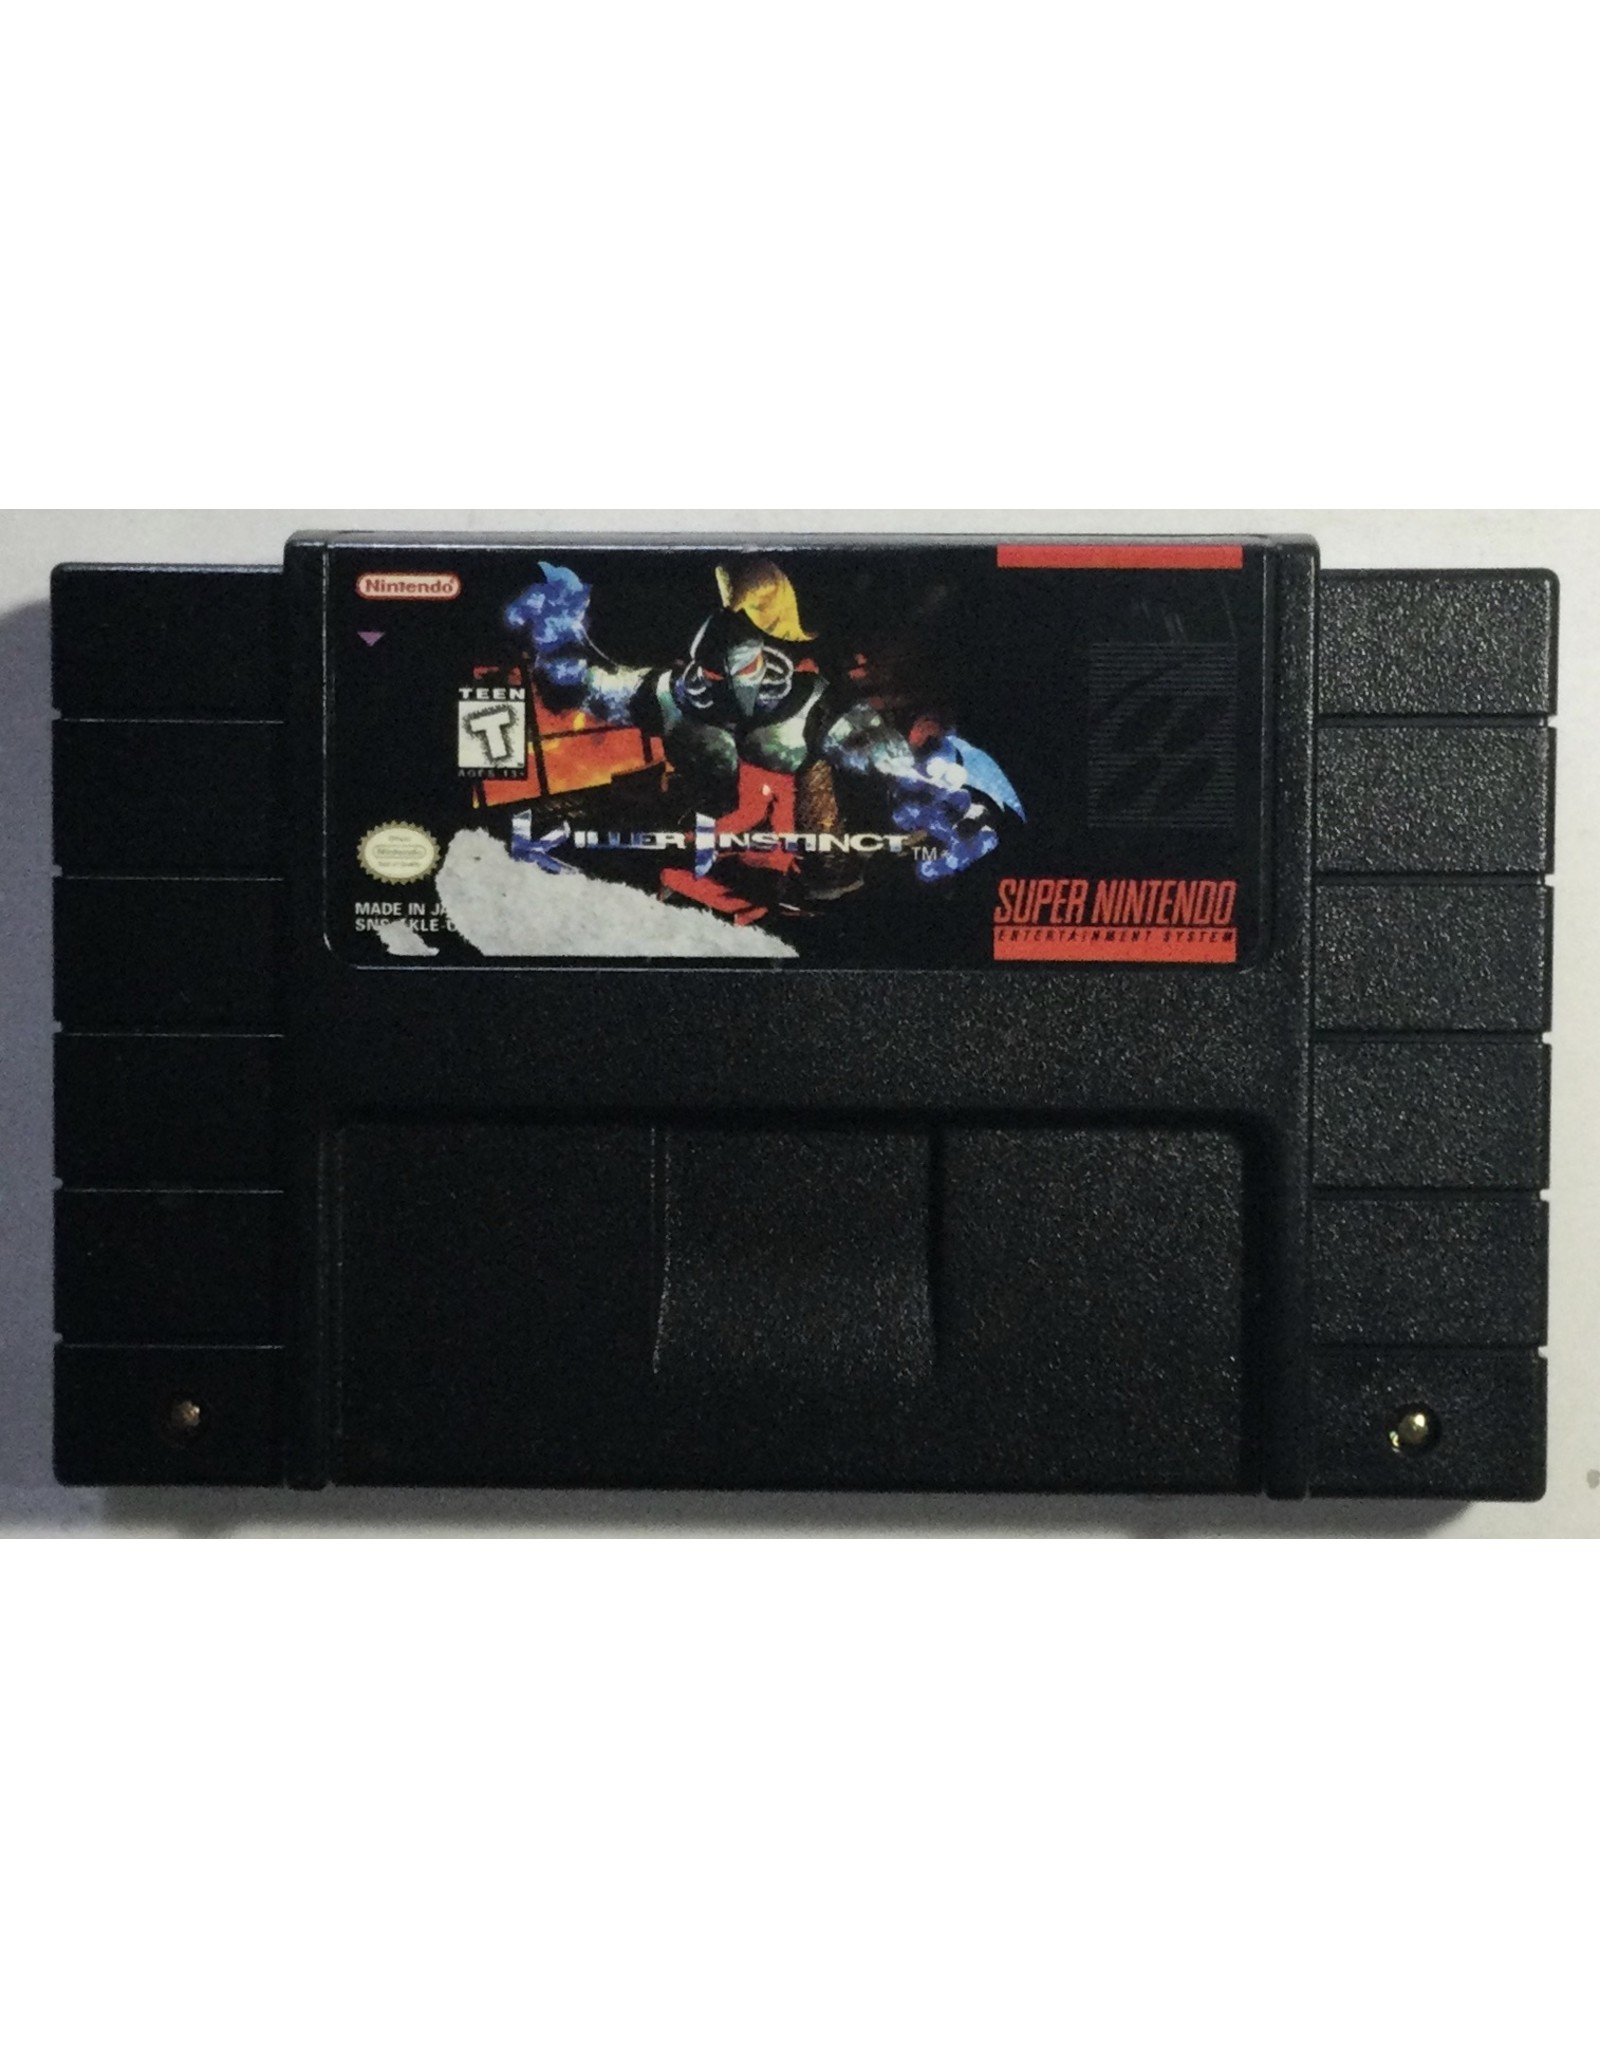 Nintendo Killer Instinct for Super Nintendo Entertainment System (SNES)